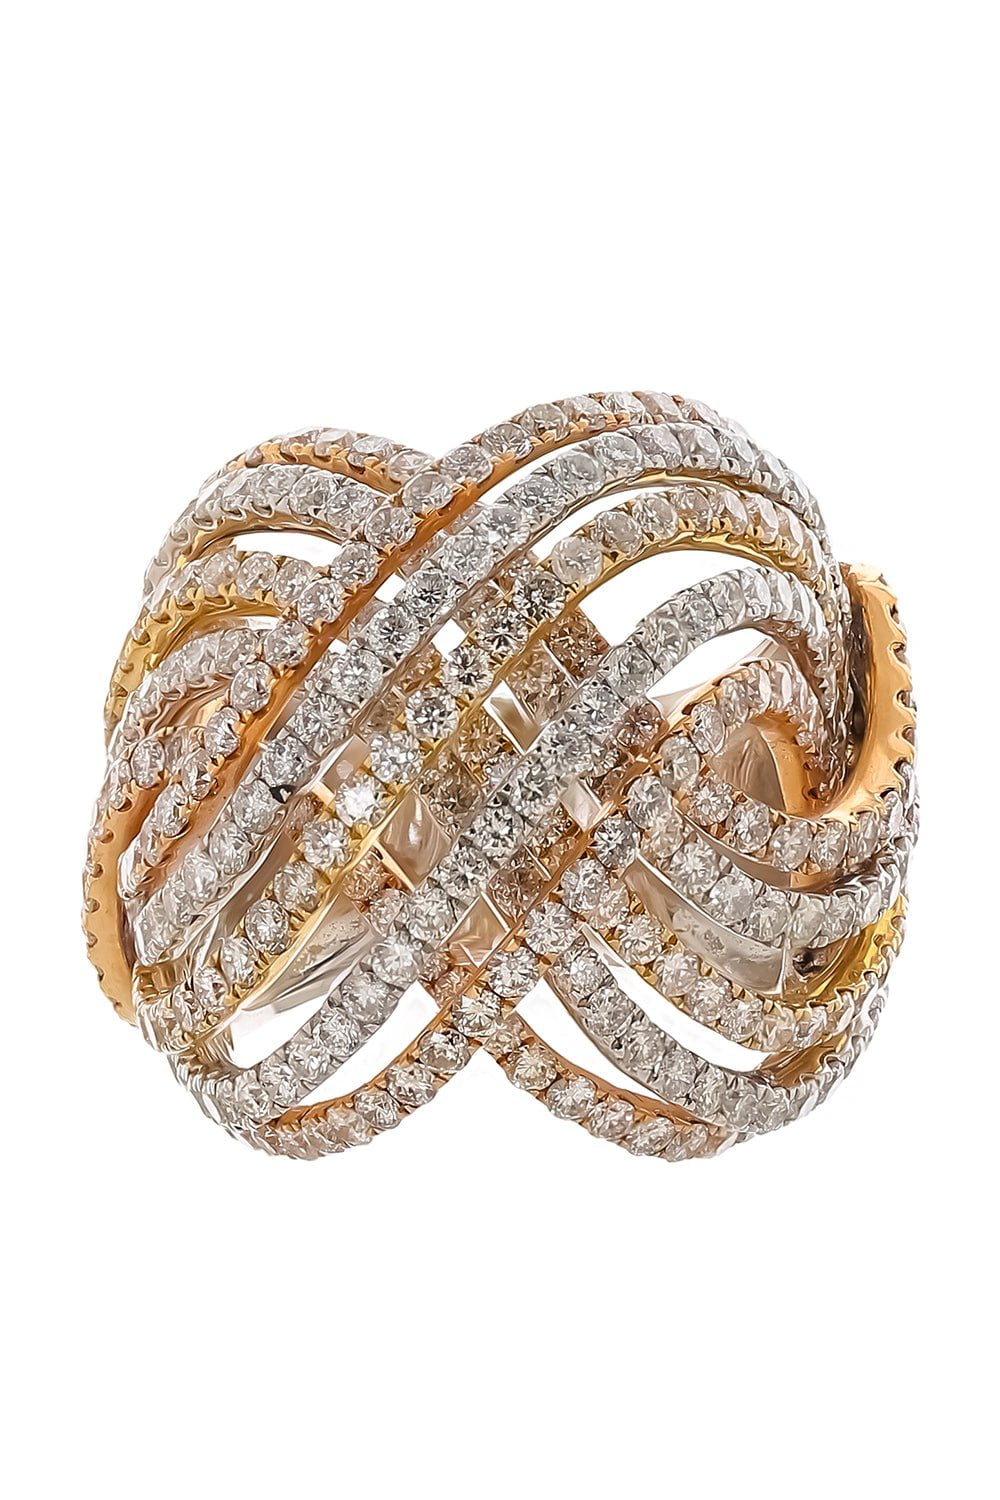 DIANA M. JEWELS-Intertwine Diamond Ring-WHITE GOLD